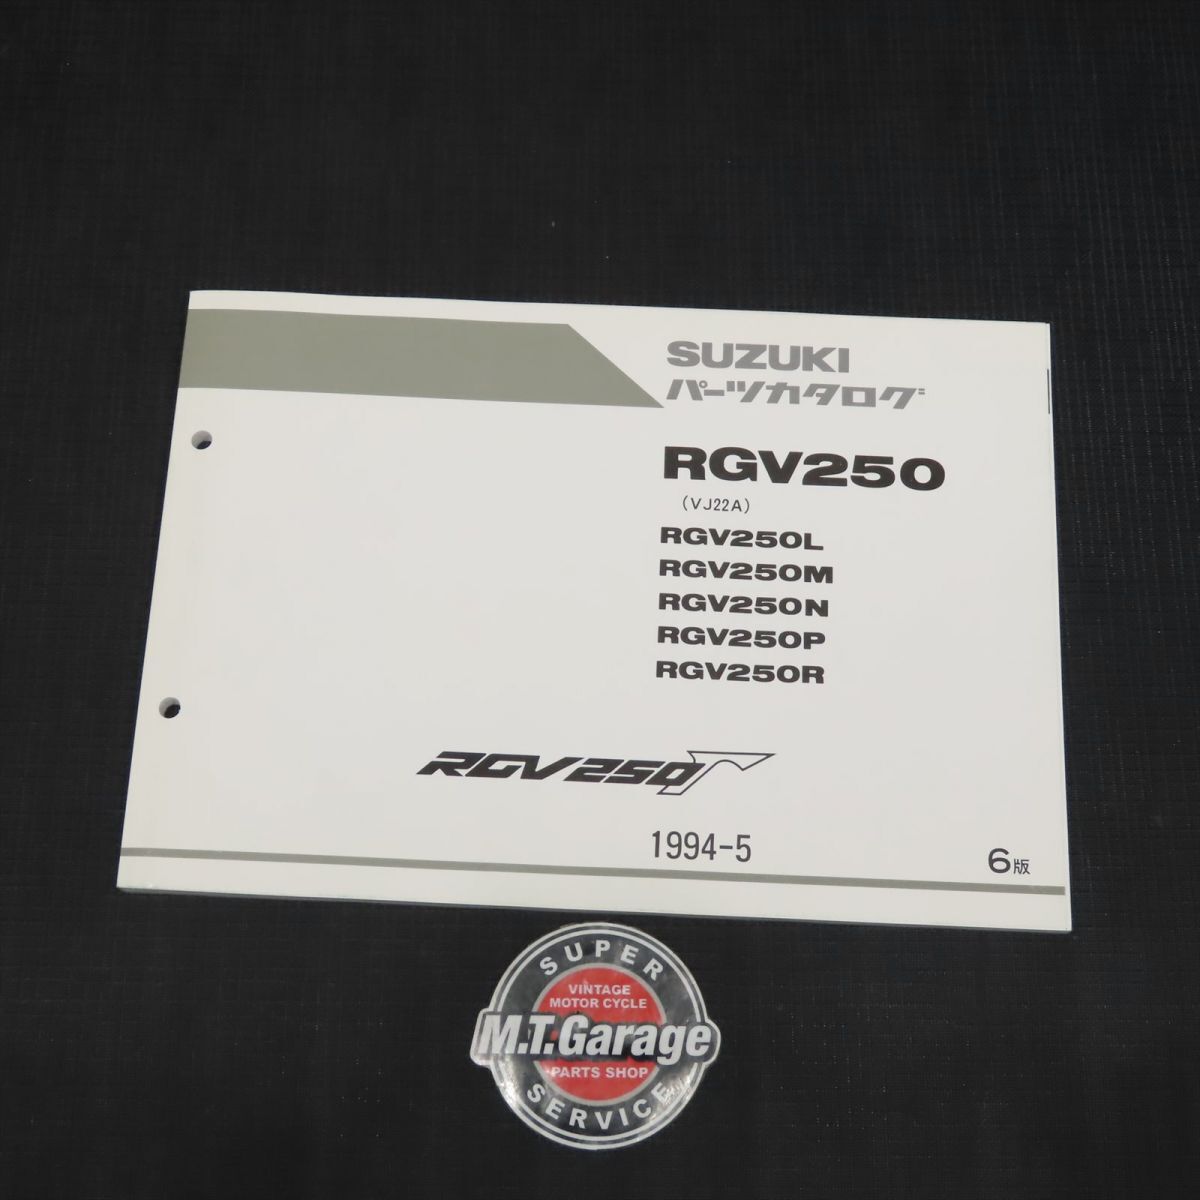  Suzuki RGV250 Gamma VJ22A parts catalog [030]NZO-A-061